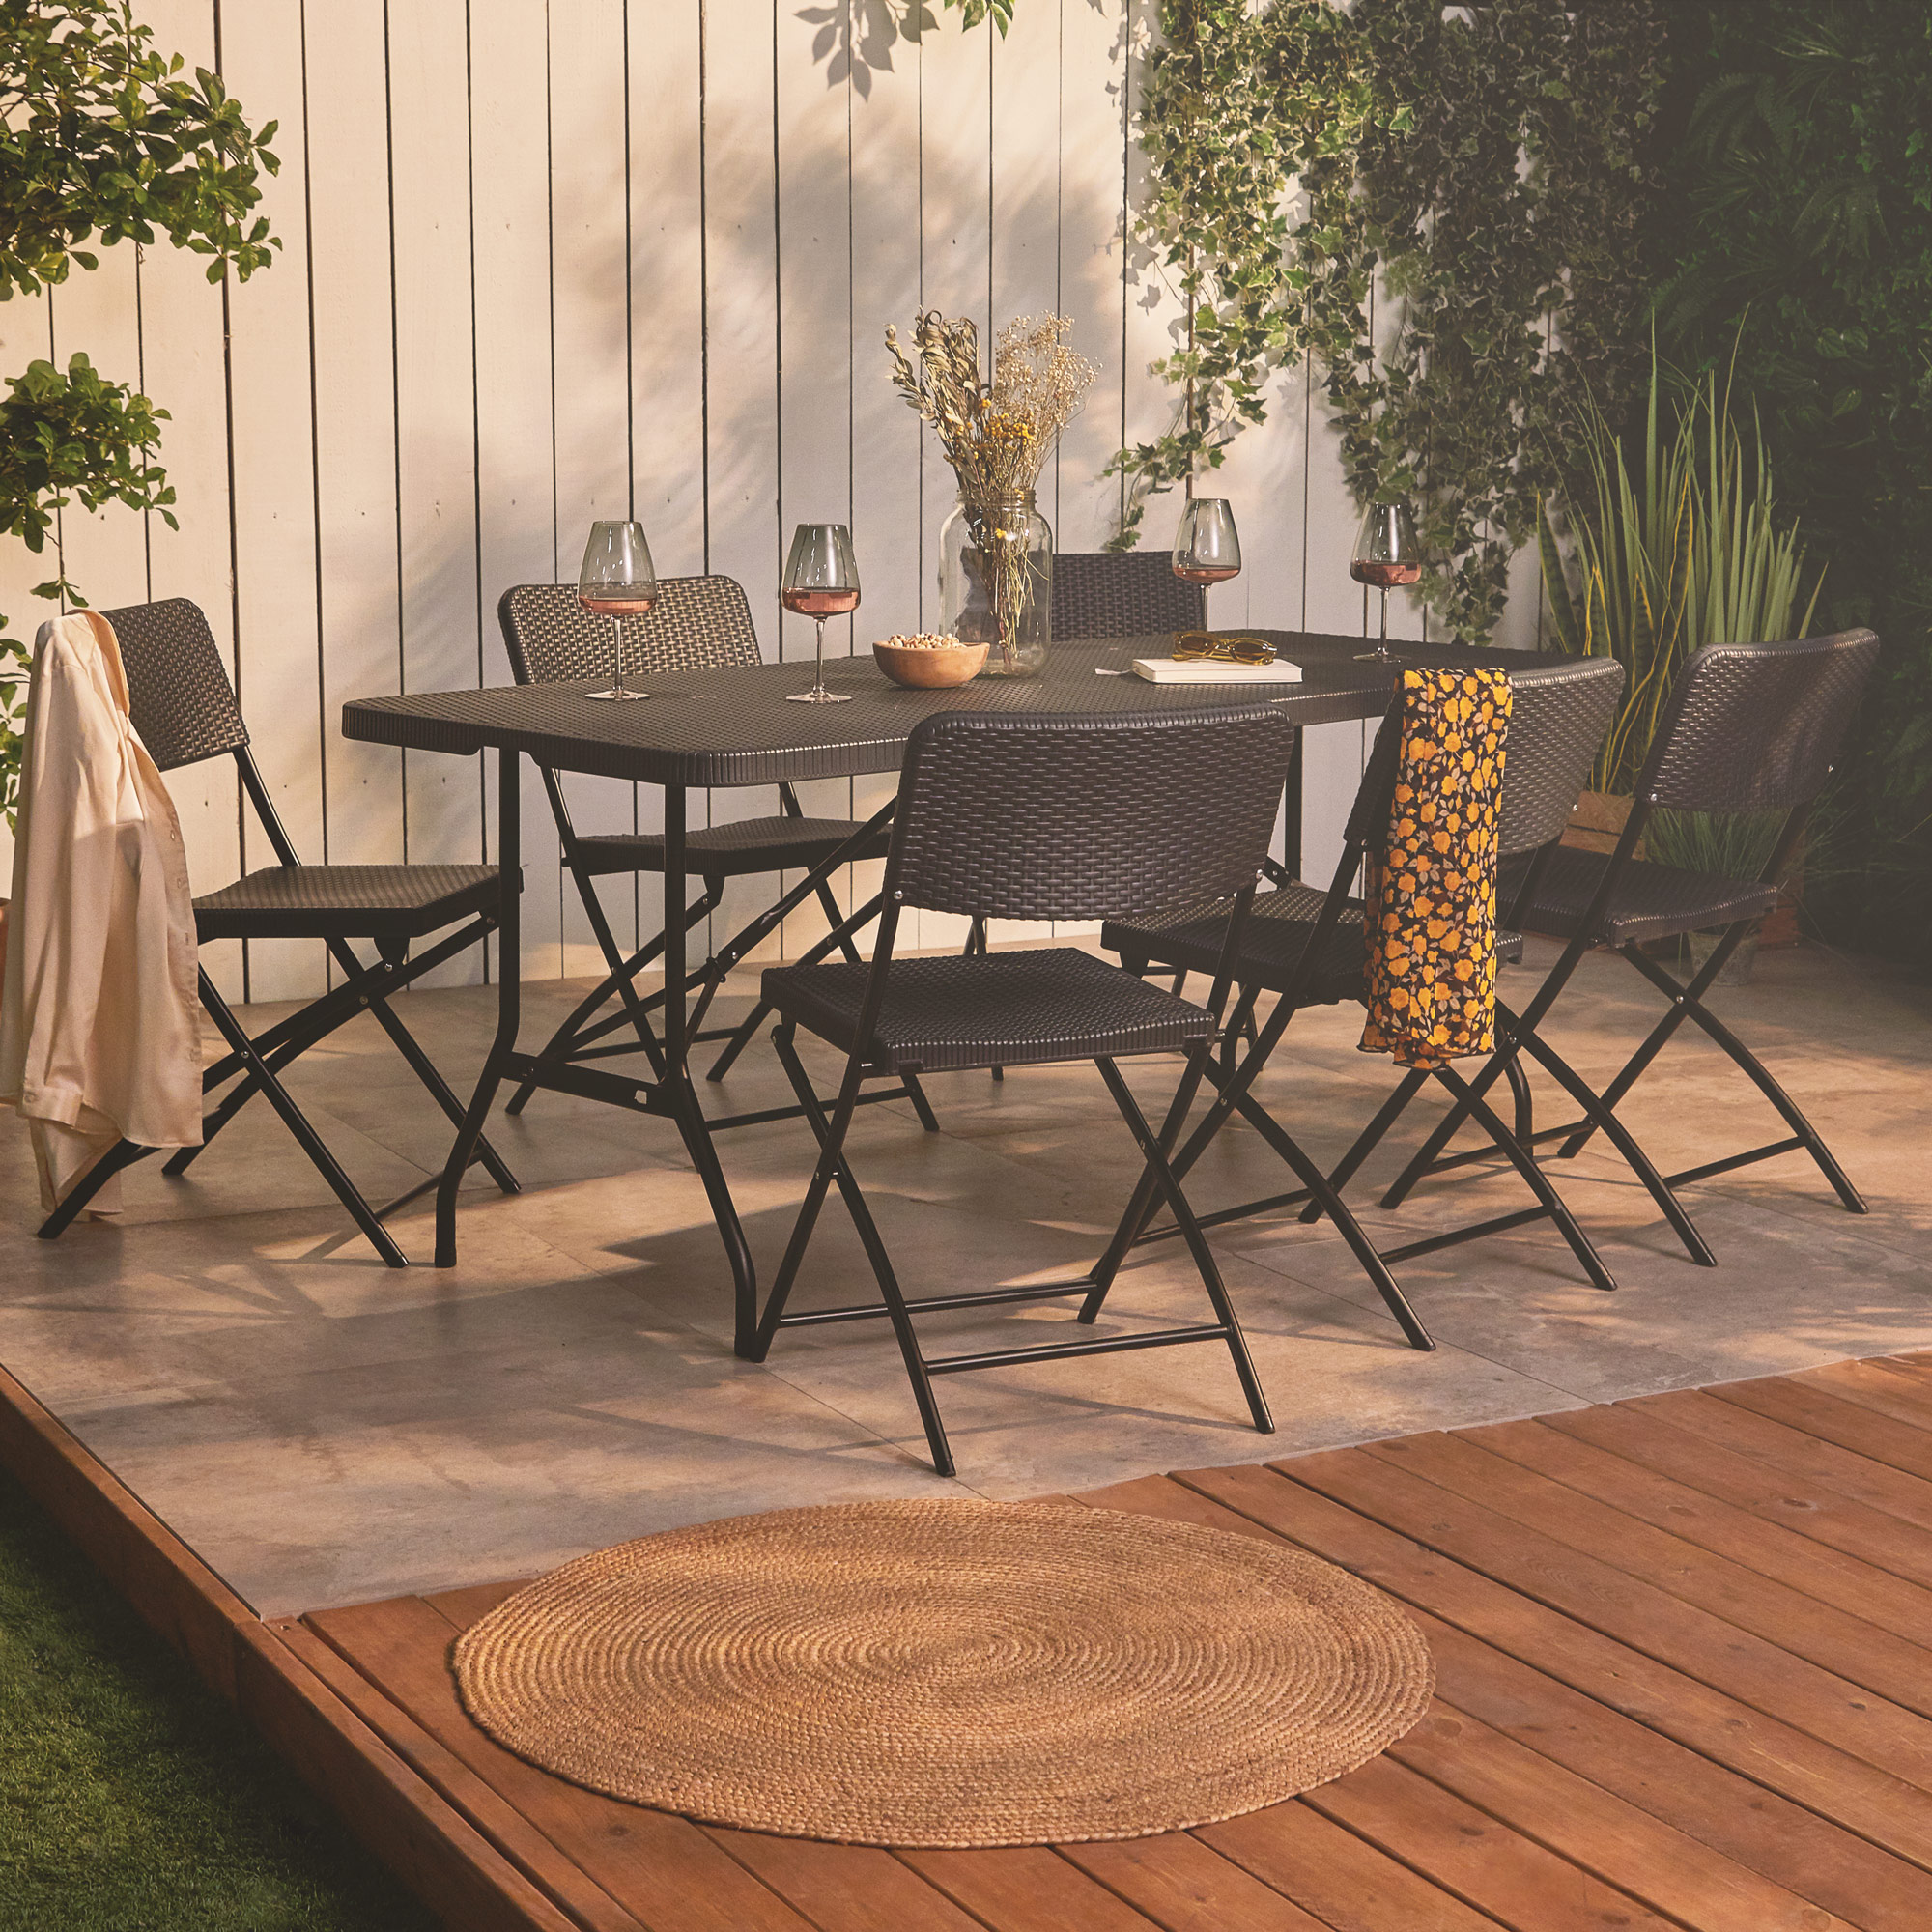 VonHaus Rattan Effect Dining Set – Folding Table Chairs Outdoor Garden